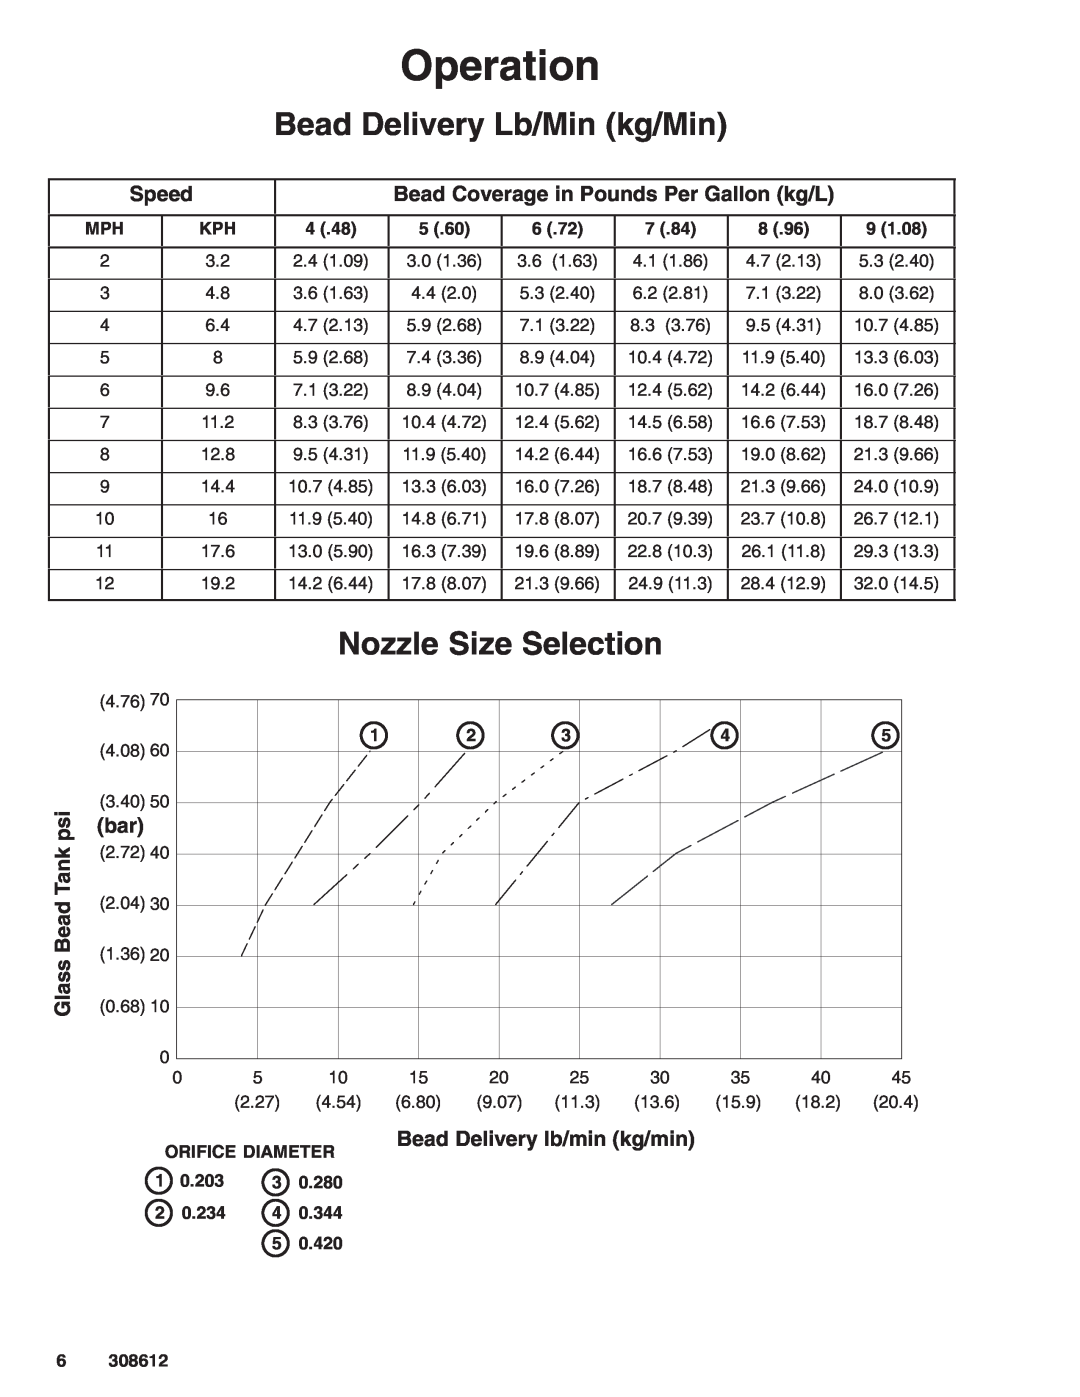 Graco Inc 308612 Speed, Bead Coverage in Pounds Per Gallon kg/L, Tank, Glass, Bead Delivery lb/min kg/min, 0.203, 0.280 